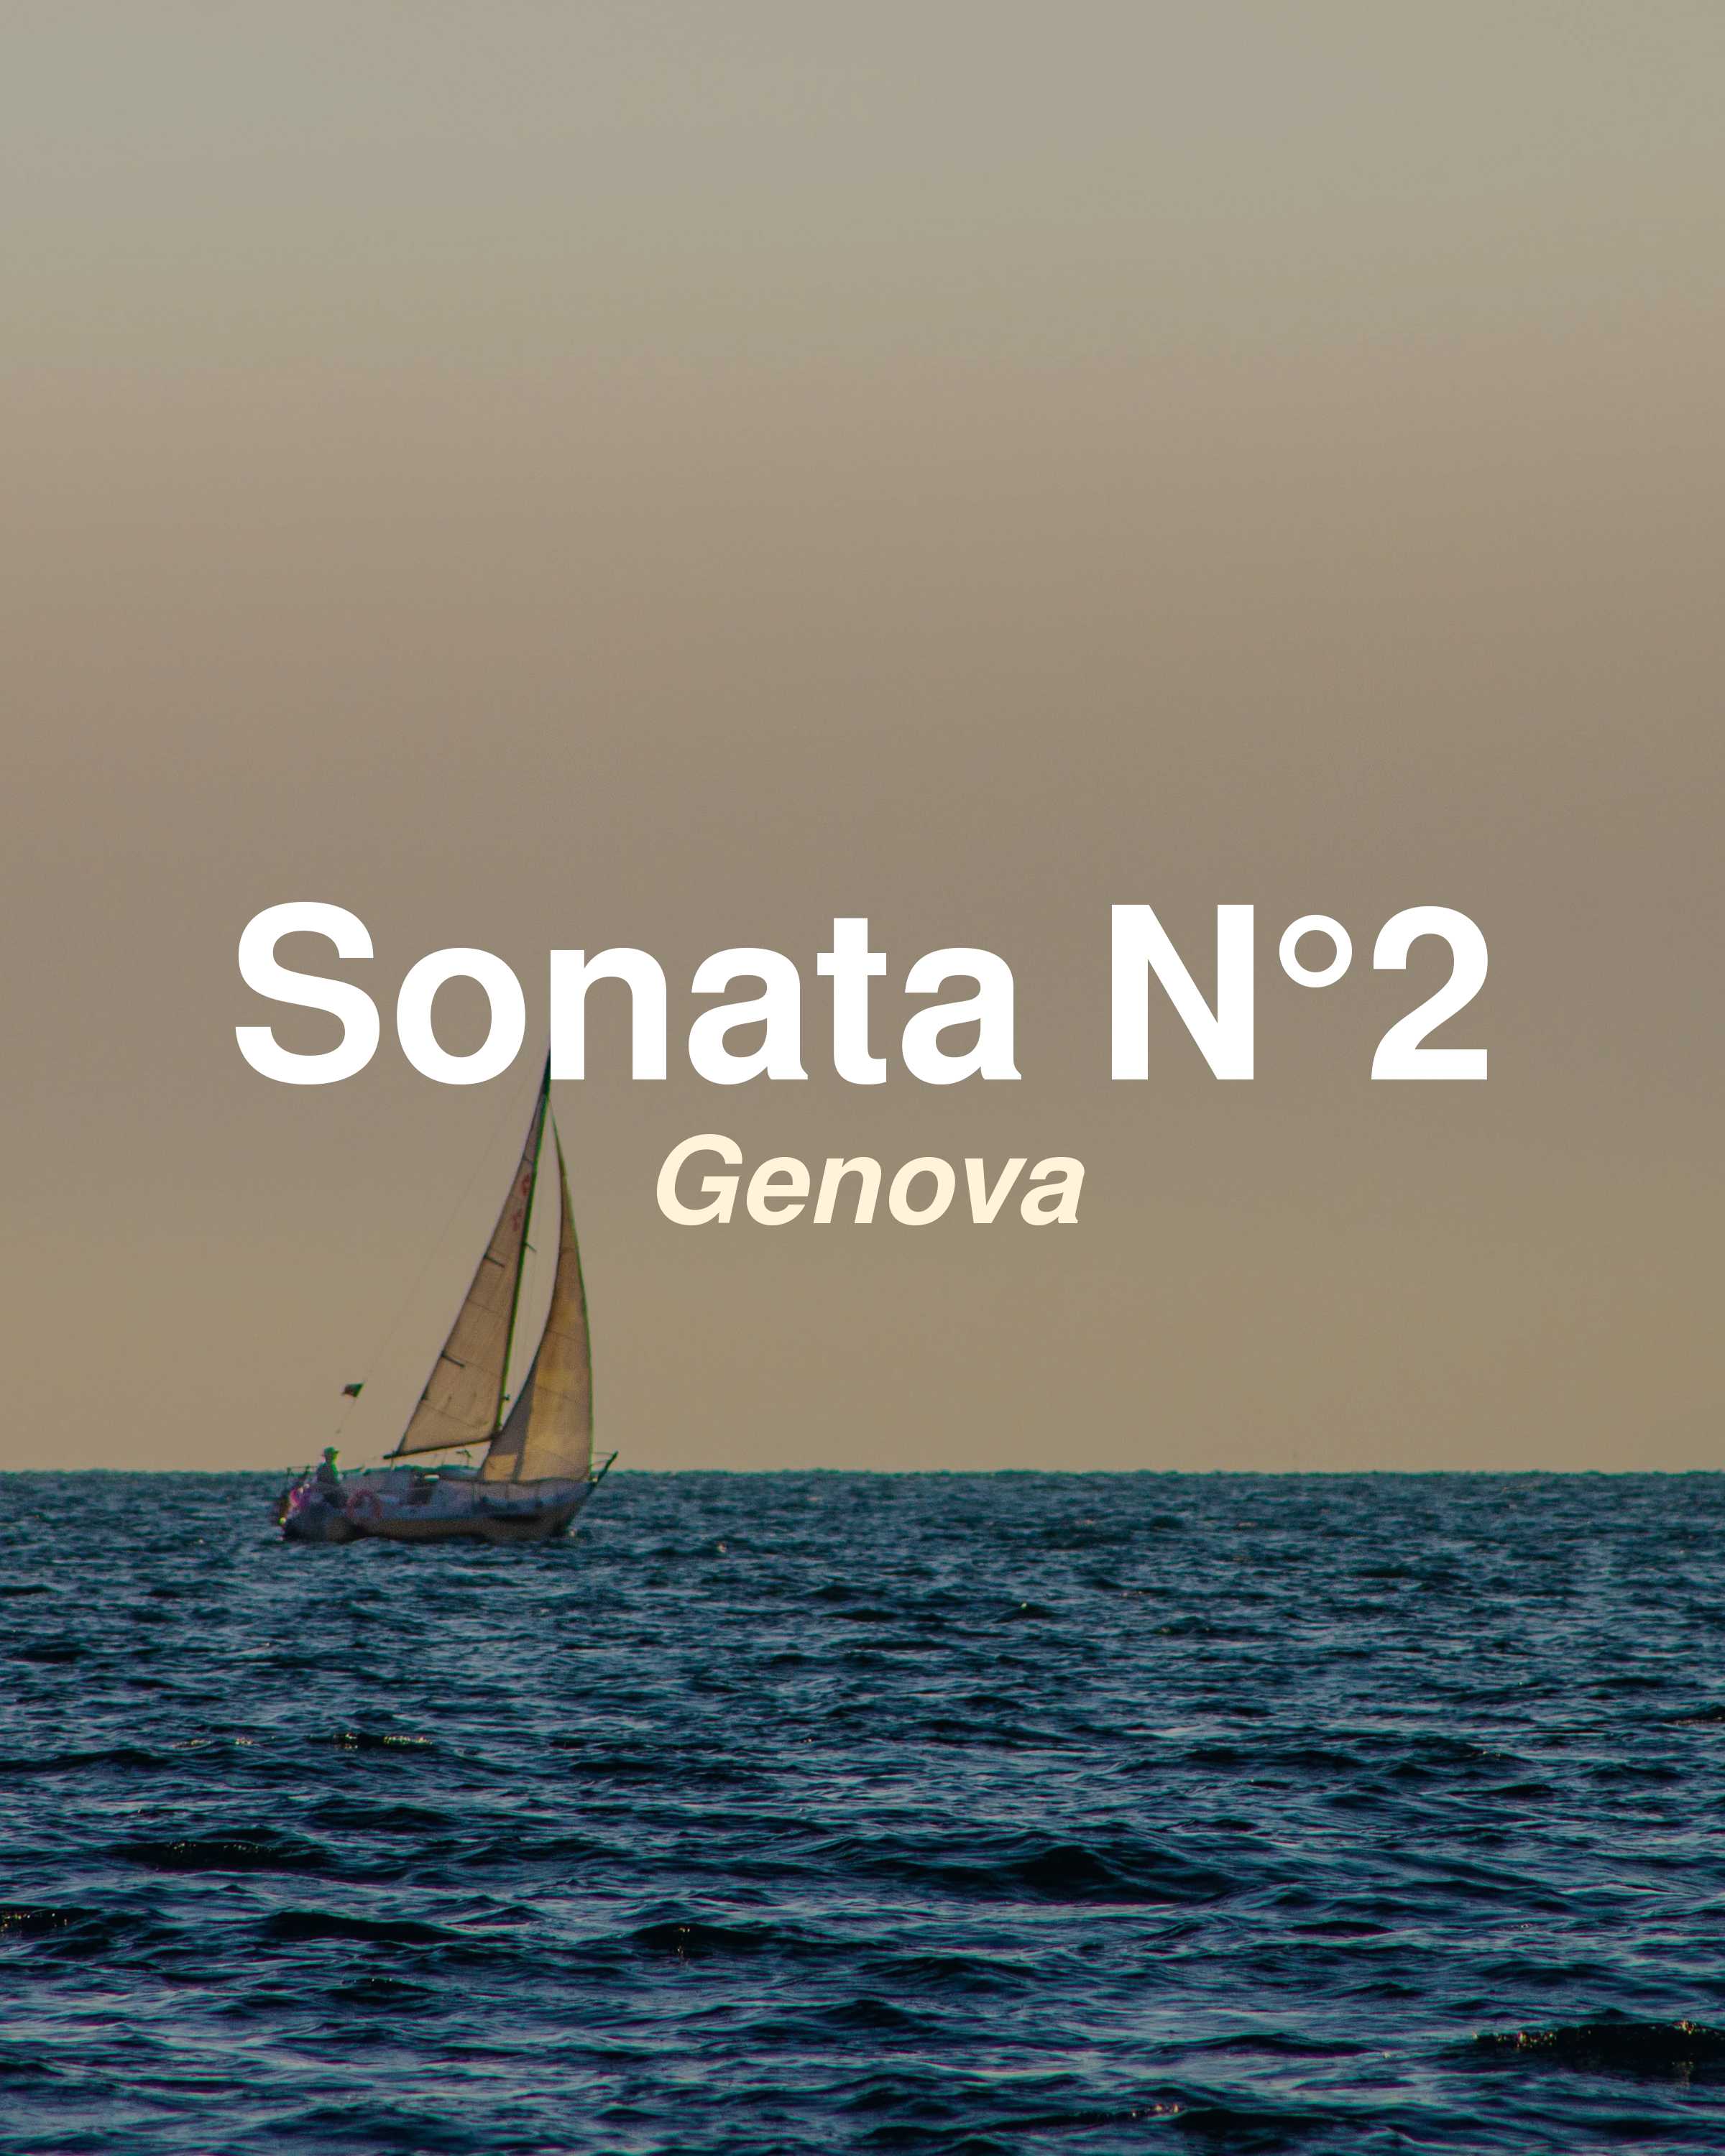 Sonata N°2 "Genova"